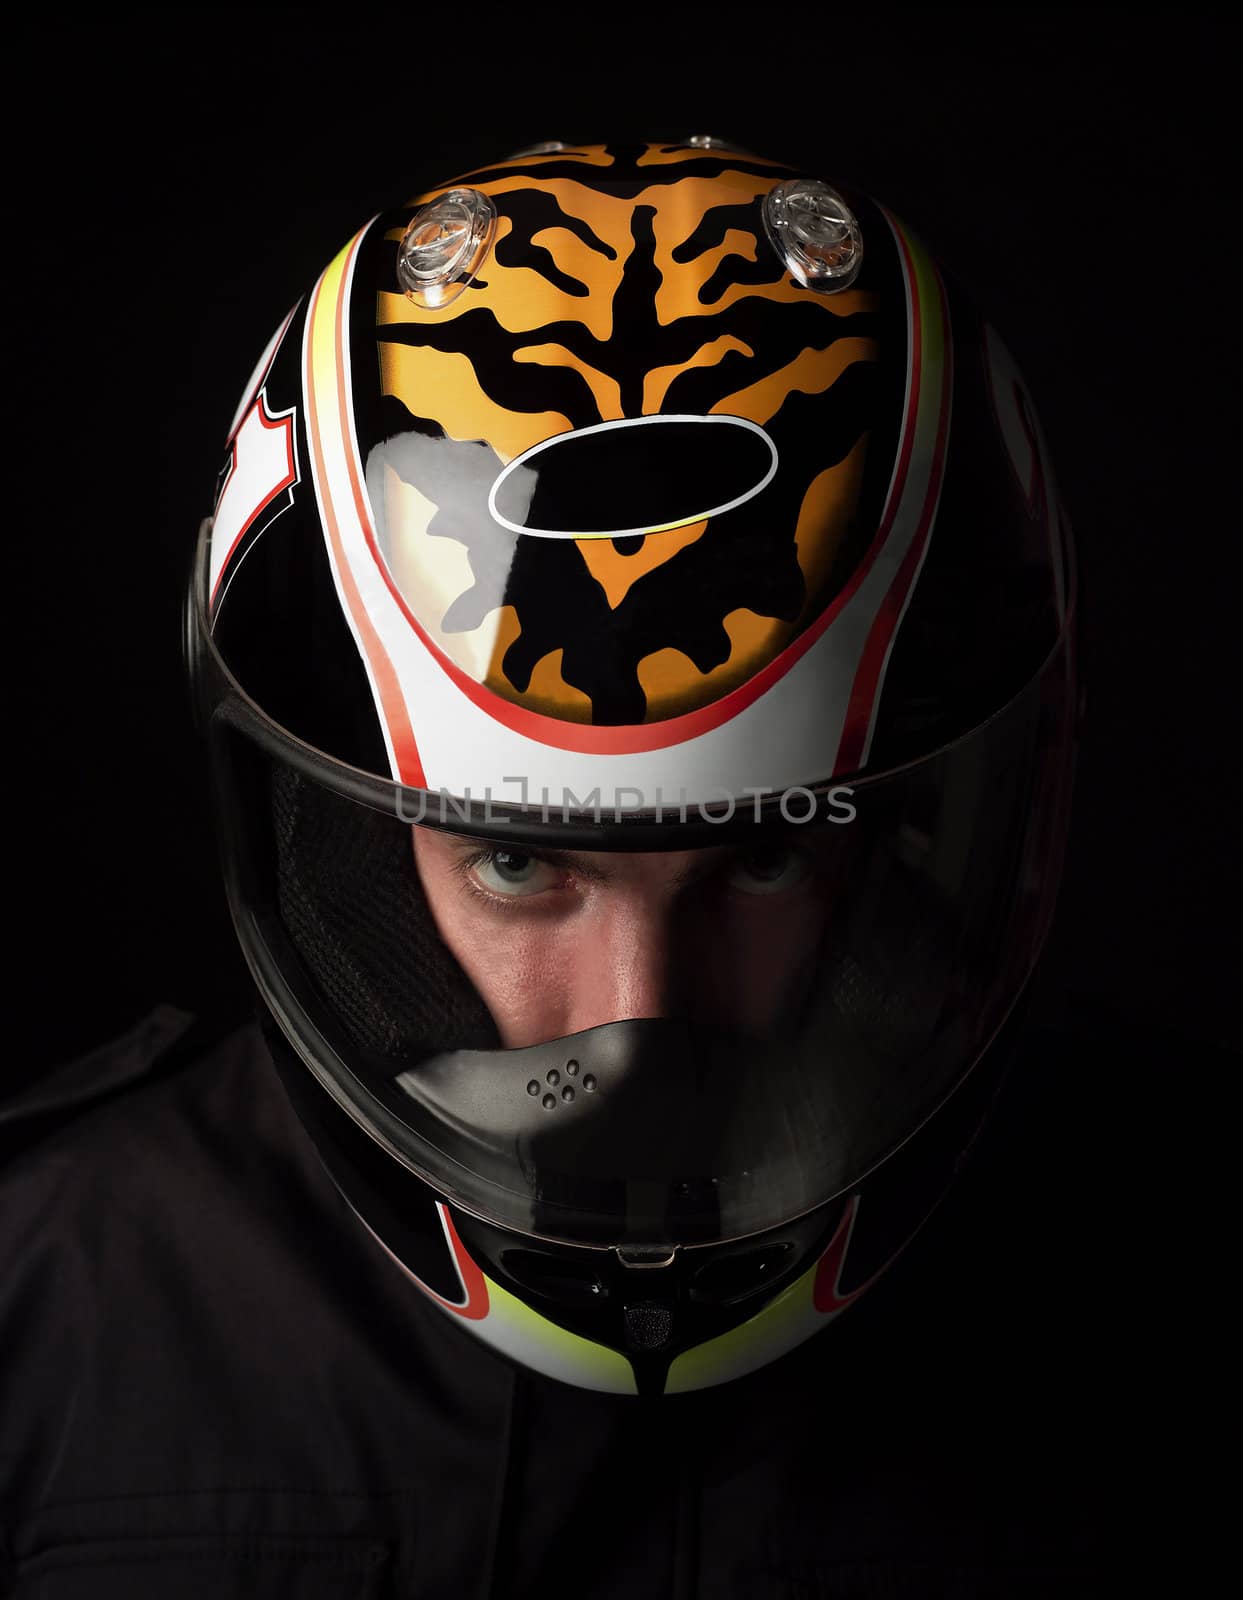 Man with motorcycle helmet on black background